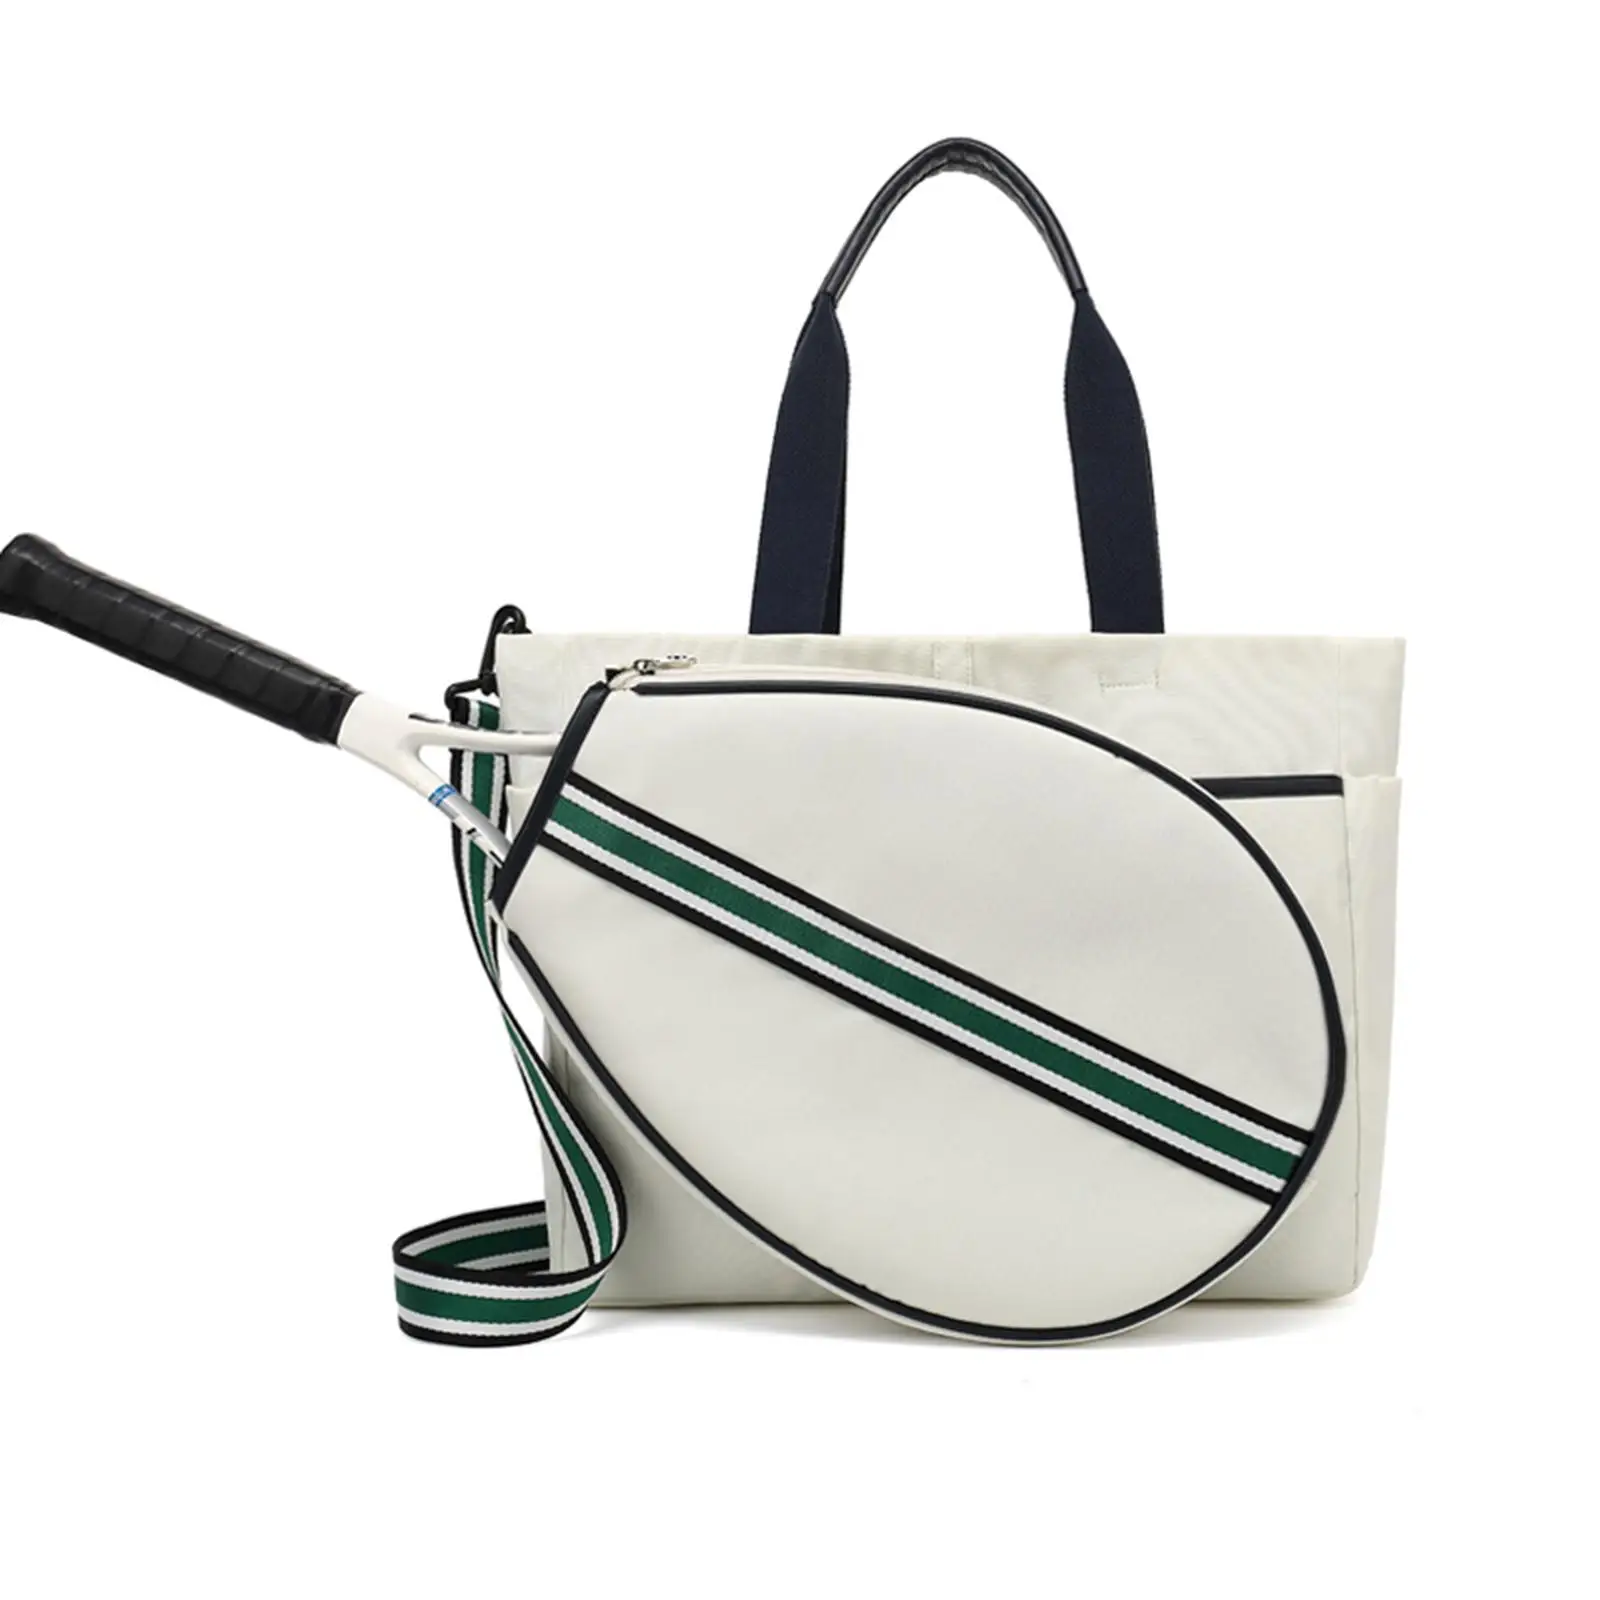 Tennis Tote Bag Detachable Racquet Cover Racket Duffel Carrying with Detachable Shoulder Strap Badminton Bag Tennis Racket Bag